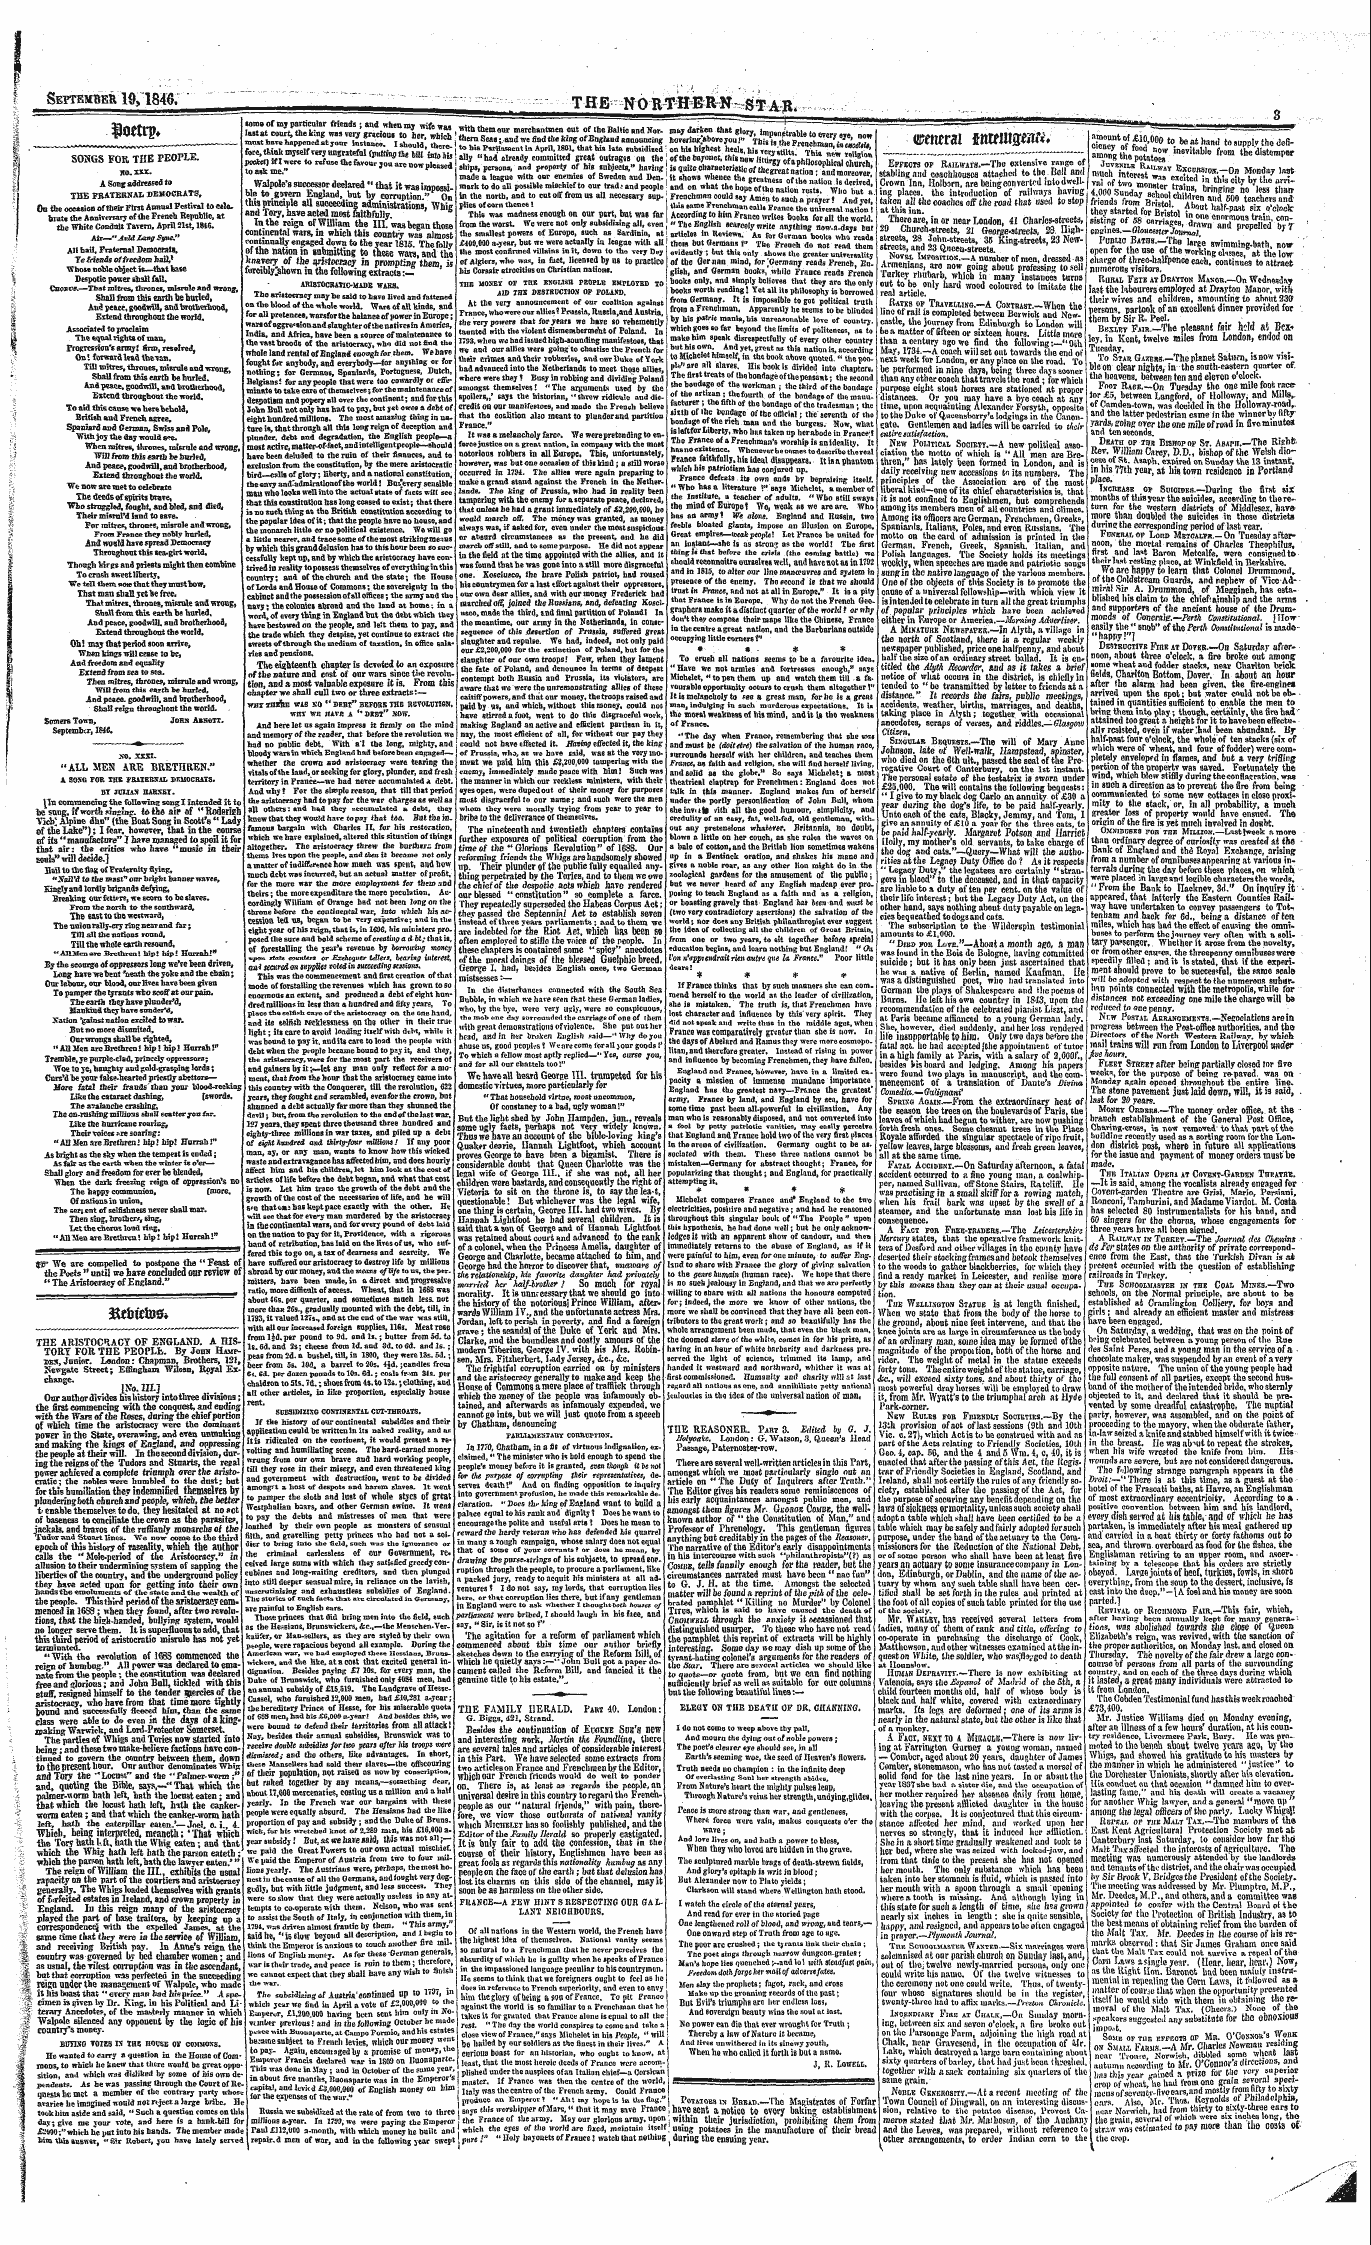 Northern Star (1837-1852): jS F Y, 2nd edition - 2ttfefefe&